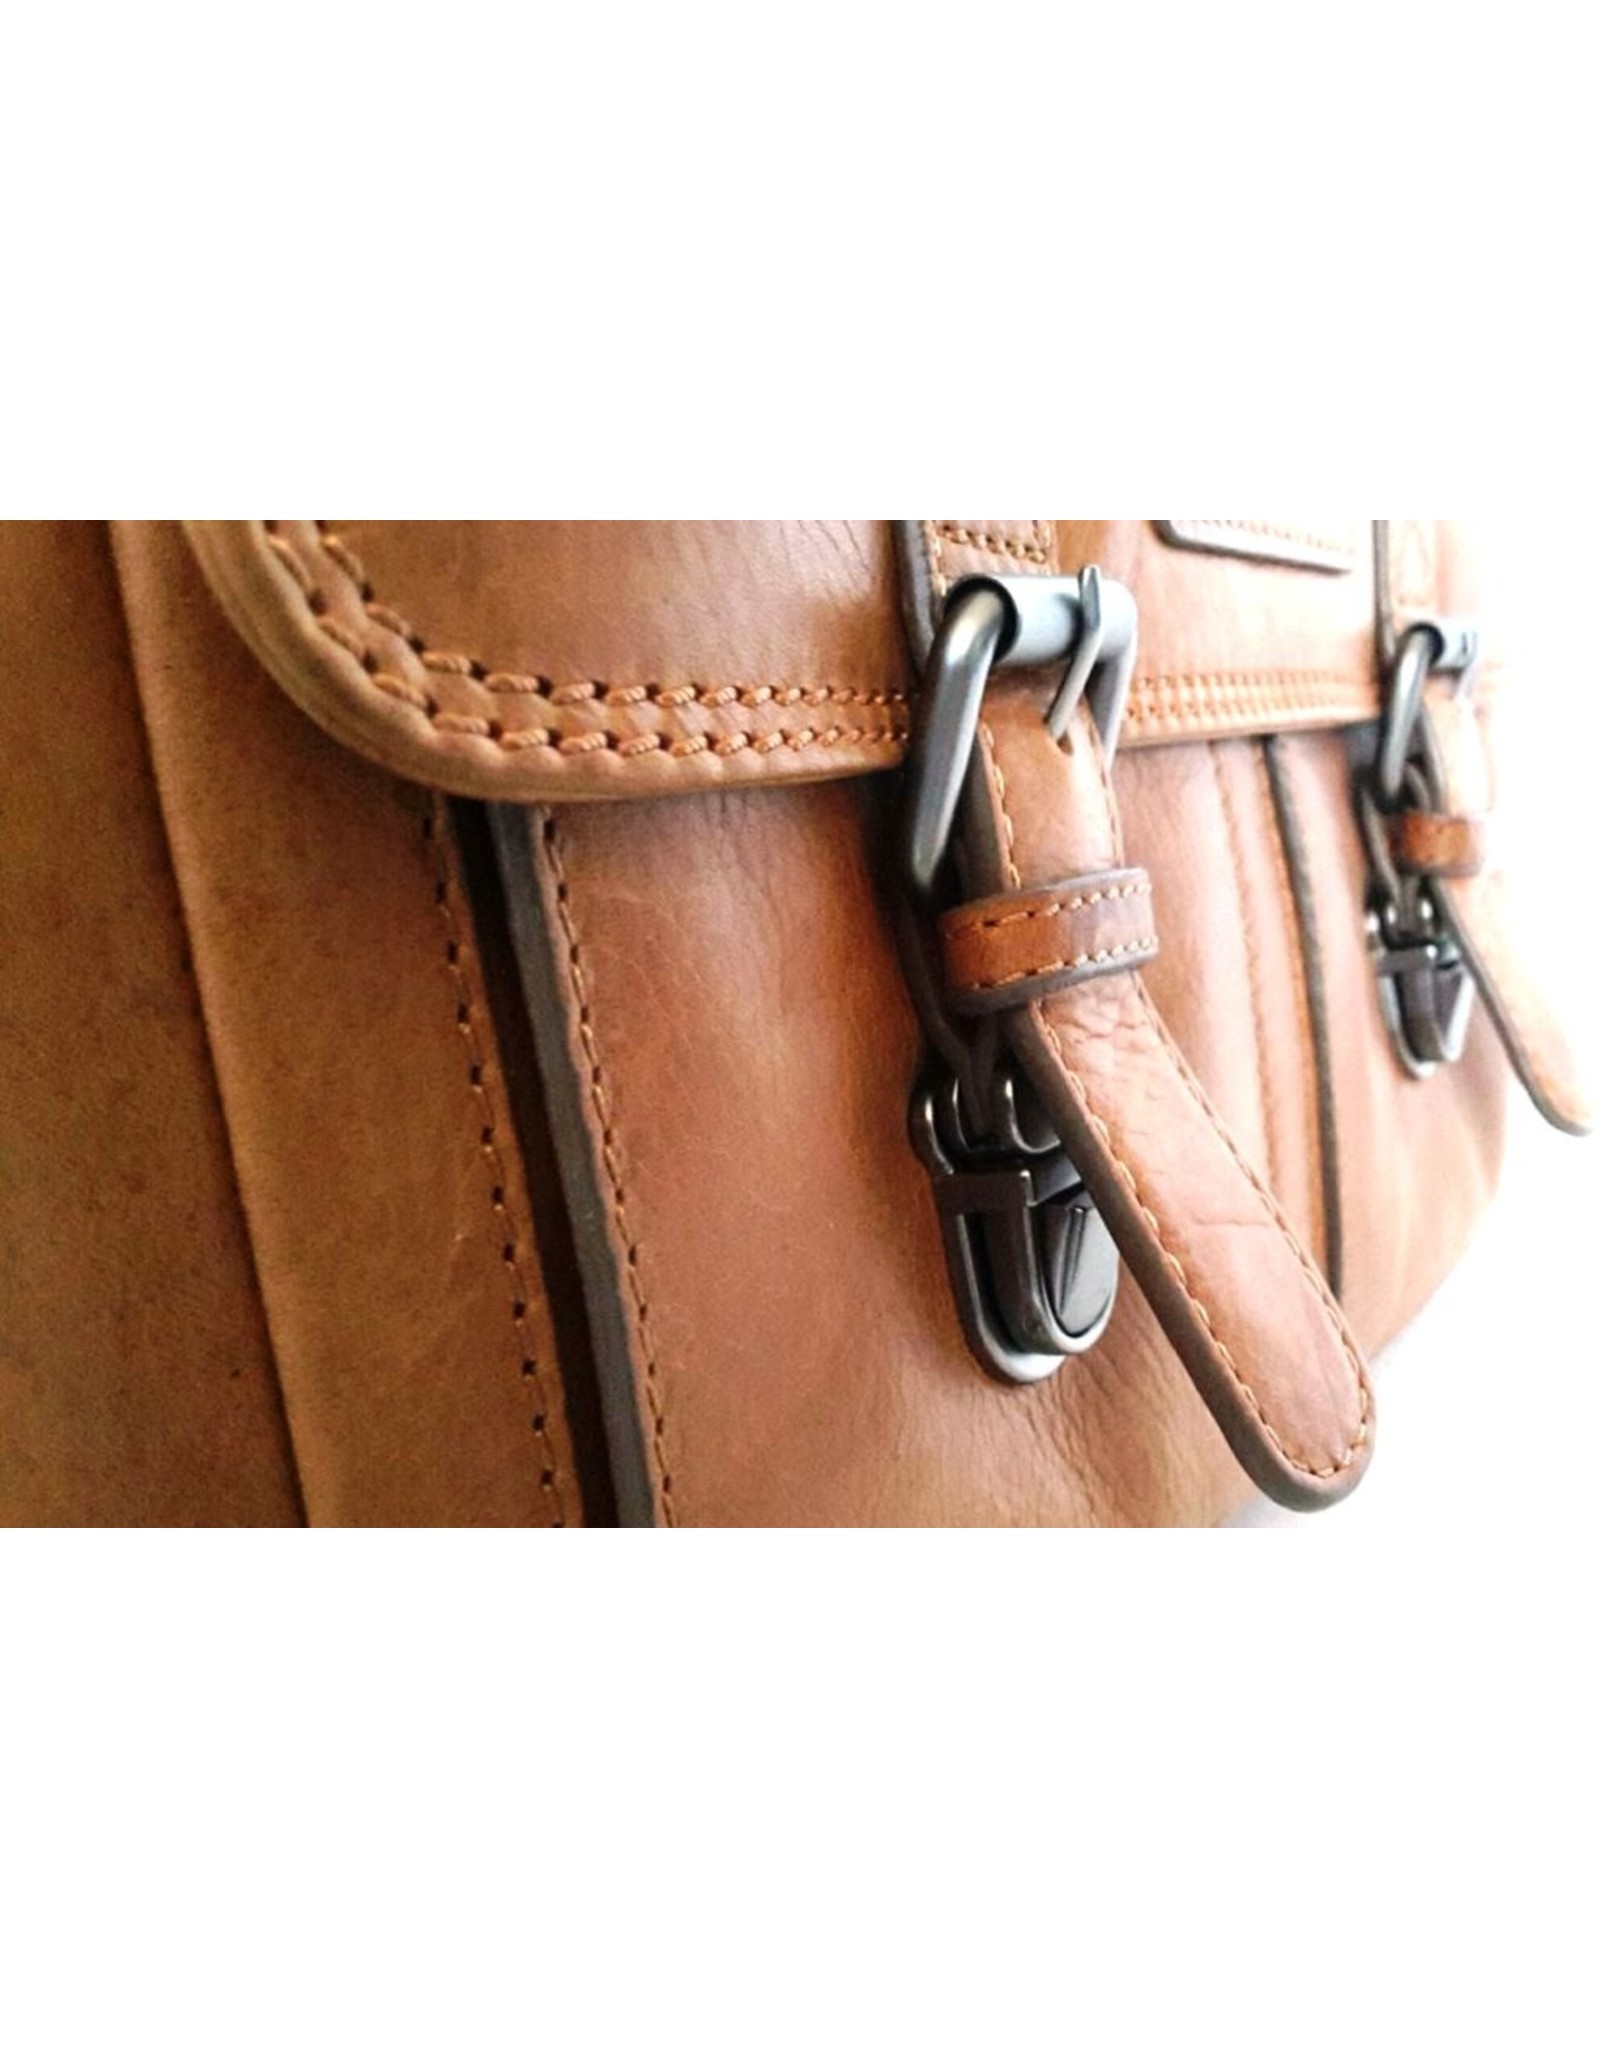 HillBurry Leather bags - Hillburry Leather school bag oiled leather (medium)